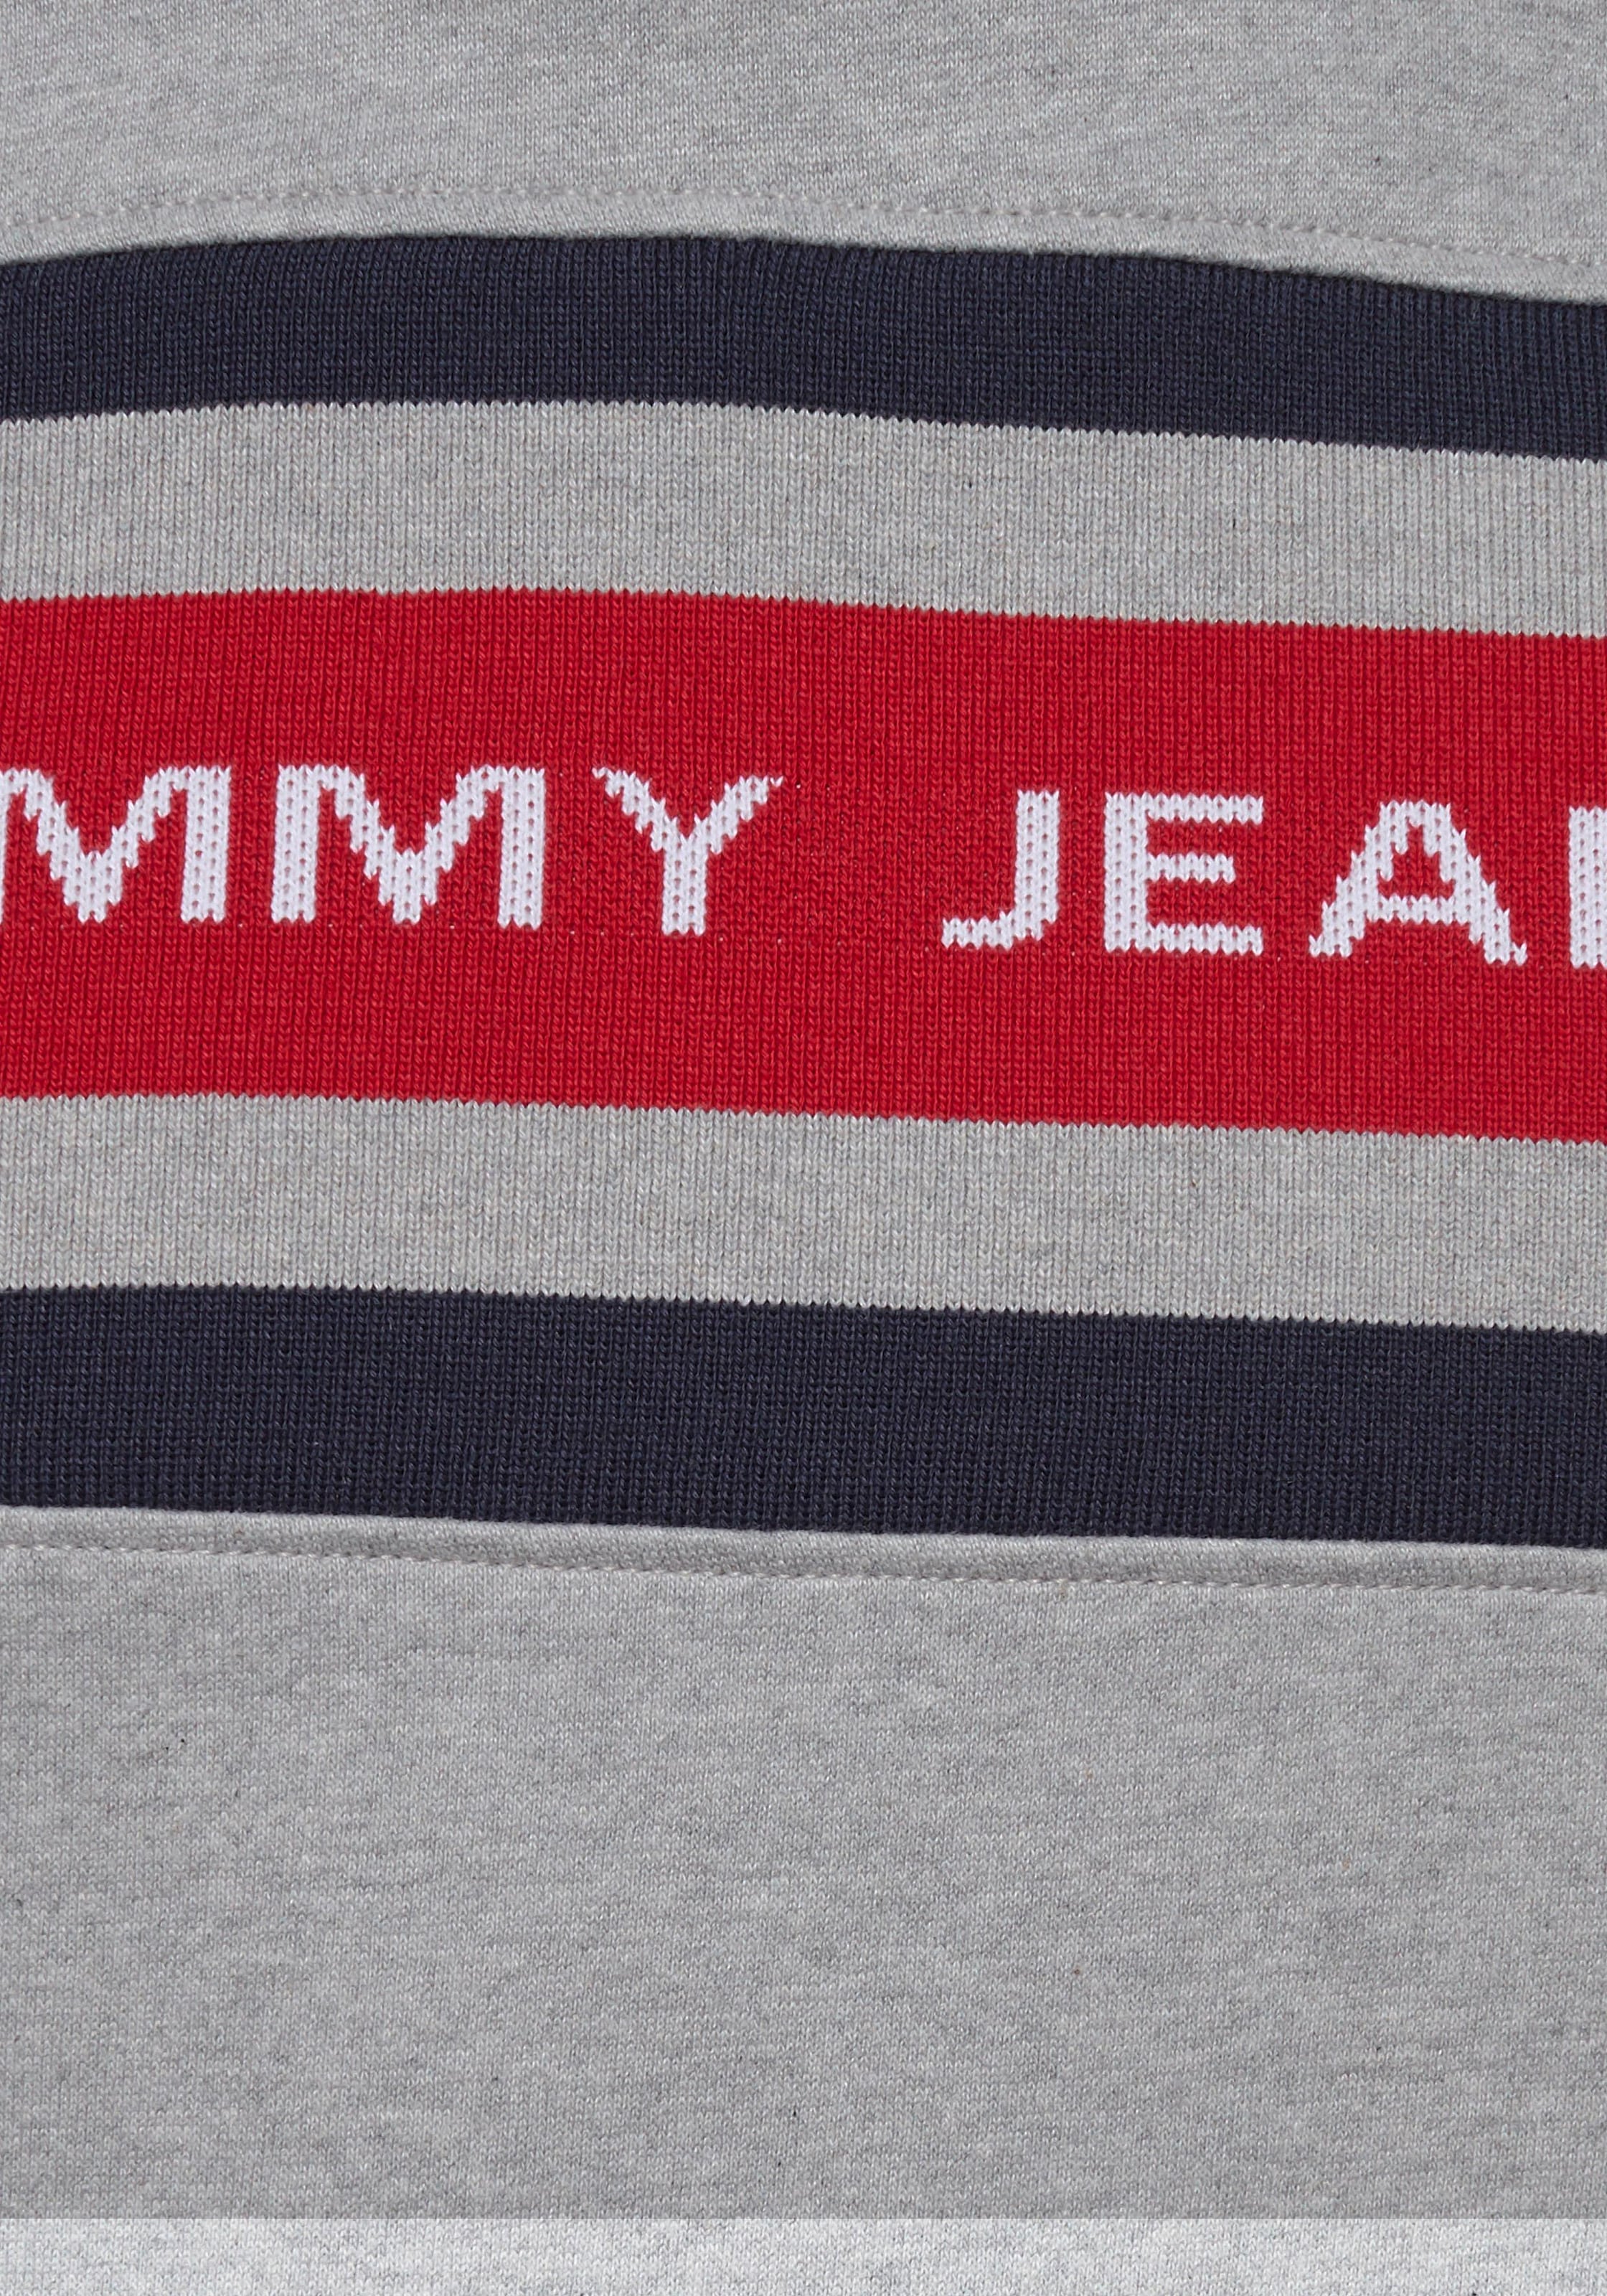 Tommy Jeans Kapuzensweatshirt »TJM FLEECE HOODIE«